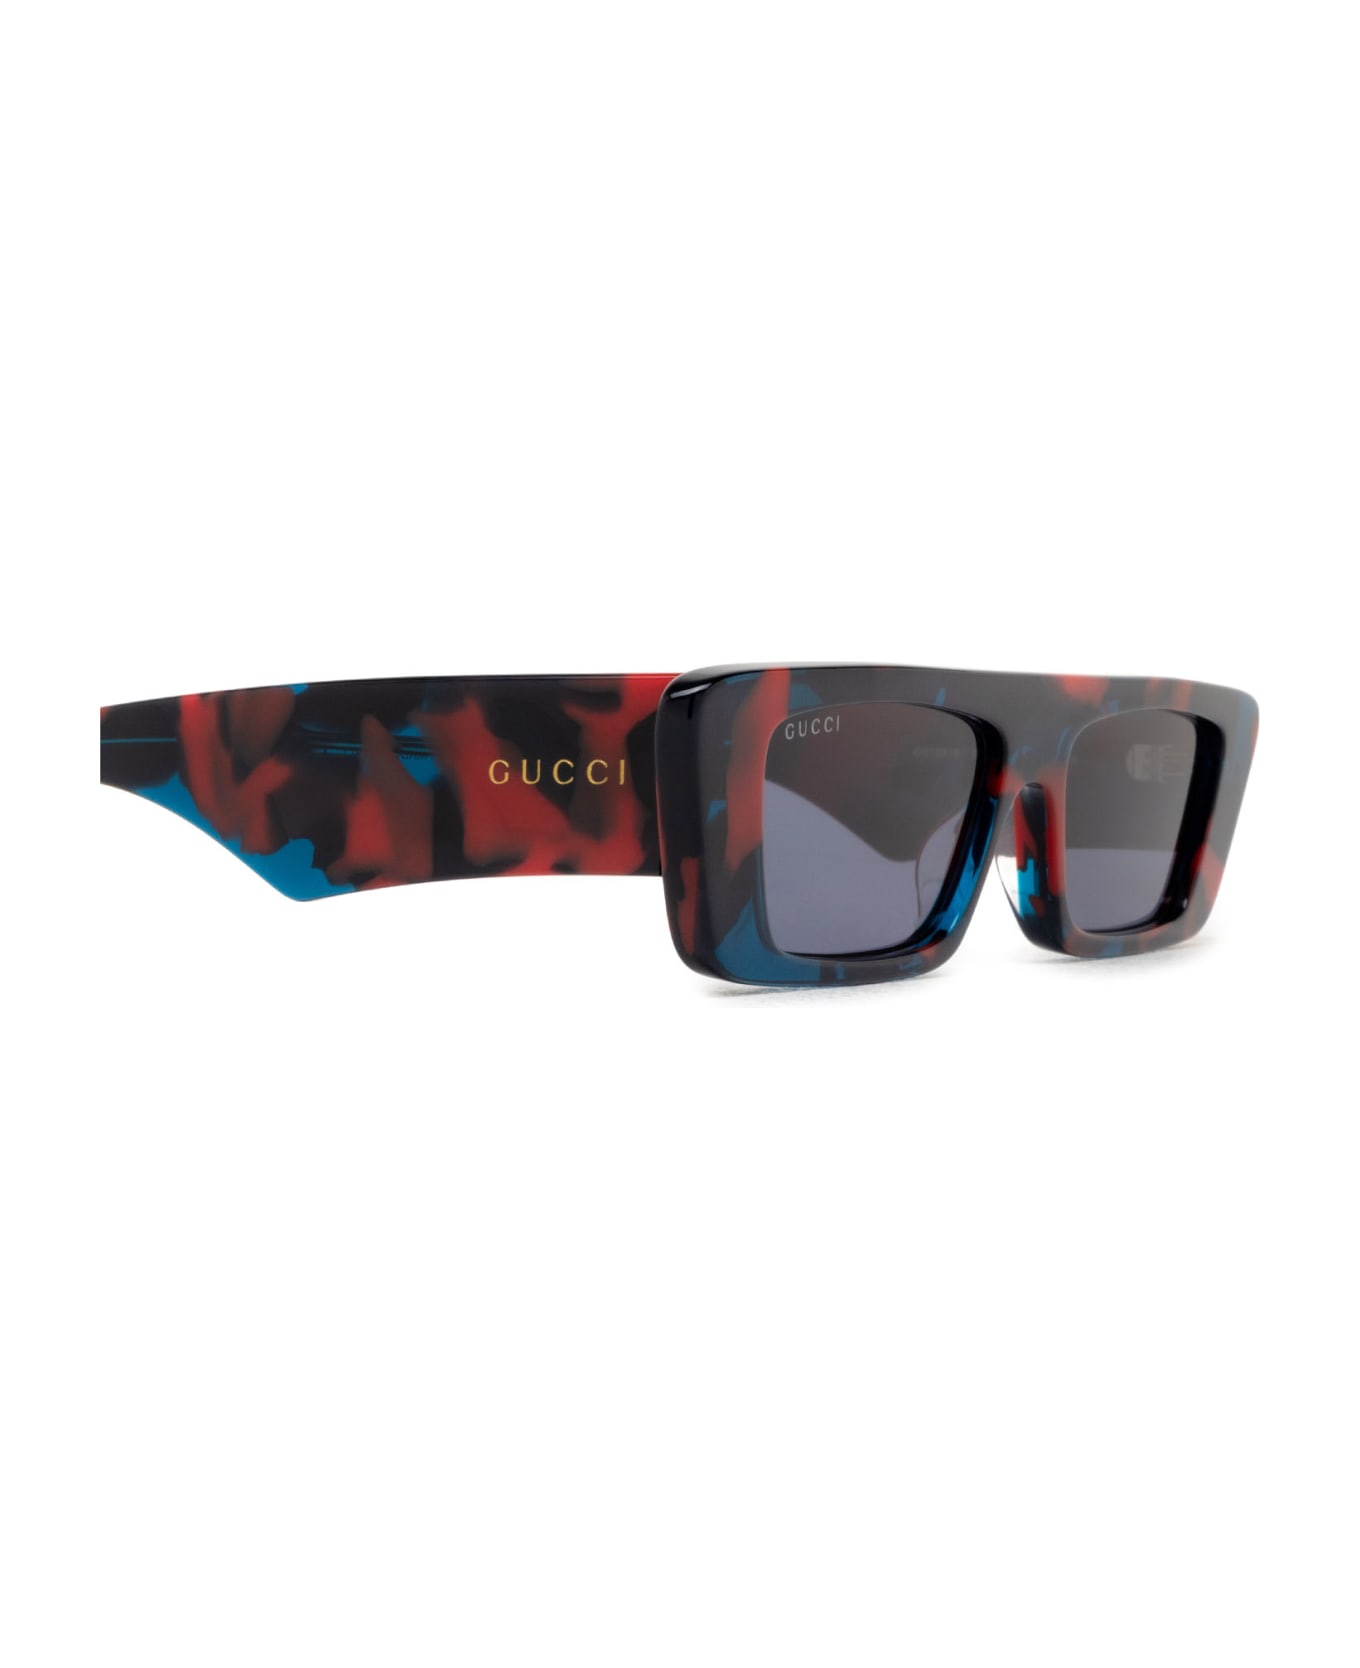 Gucci Eyewear Gg1331s Havana Sunglasses - Havana